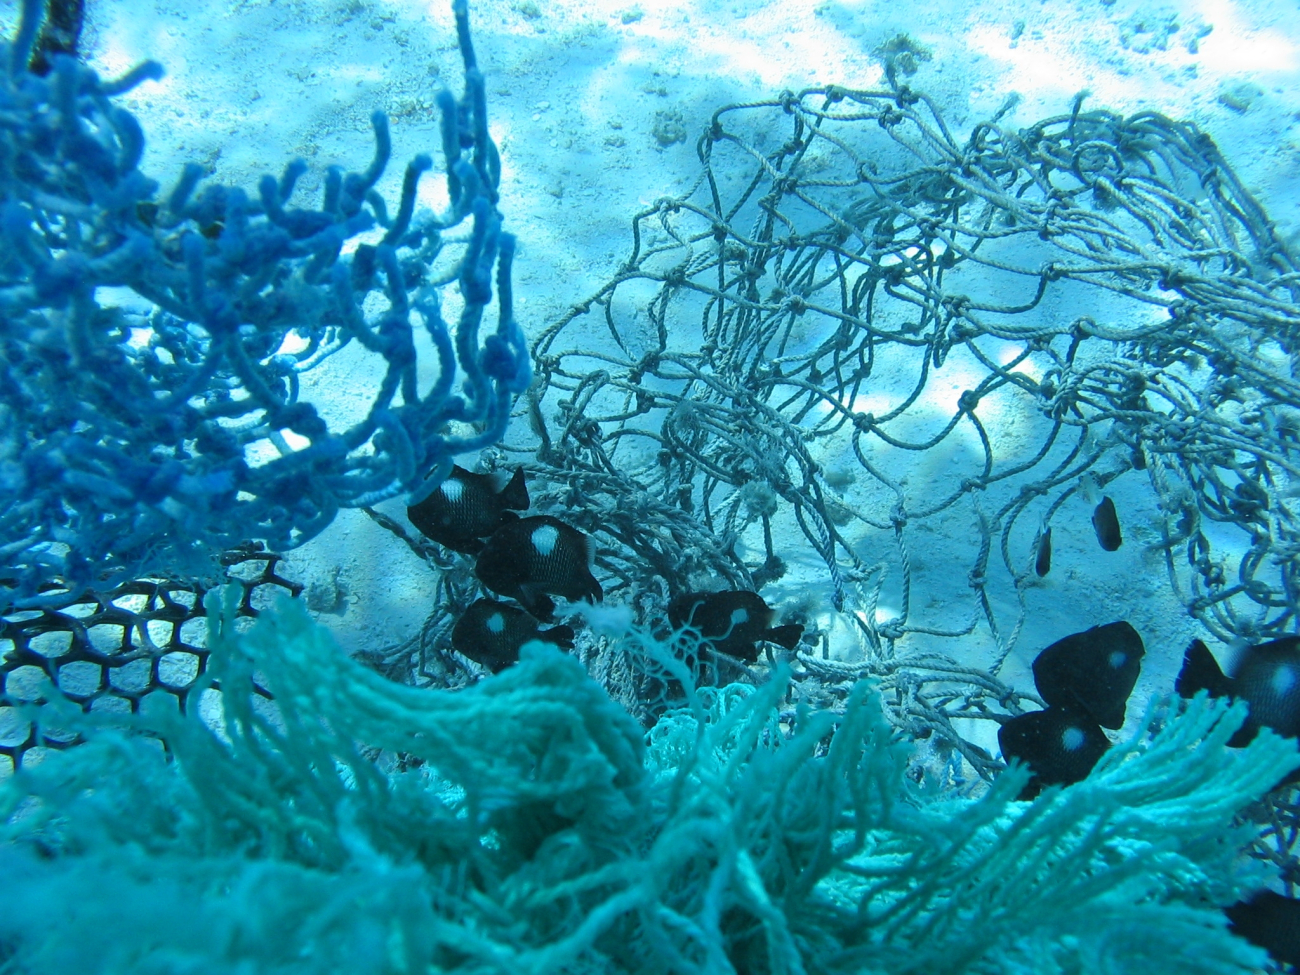 Damsel fish living at edge of net debris